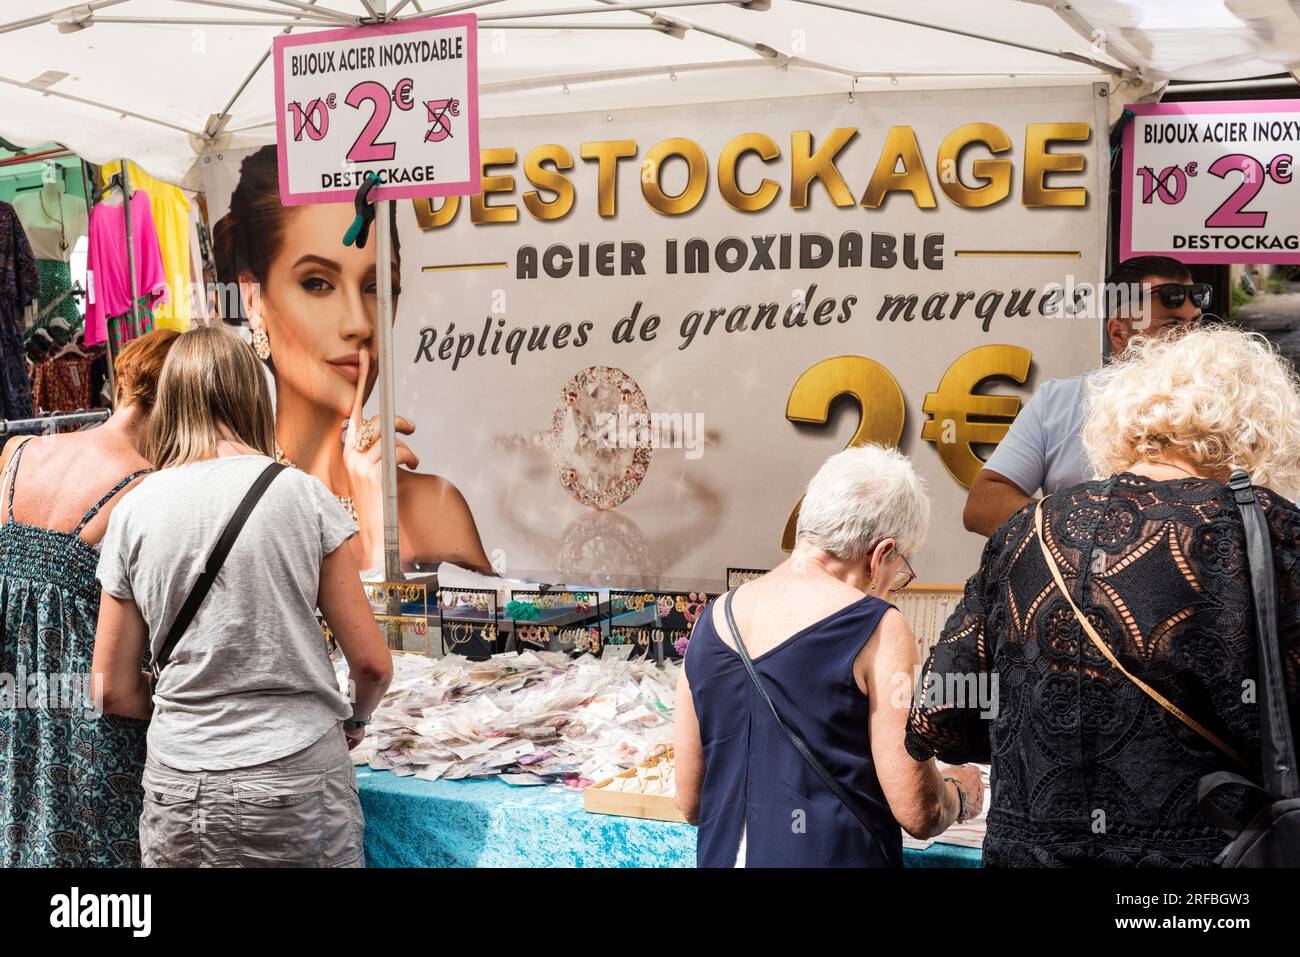 Street market stall offering stock clearance, Marseillan, Herault, Occitanie, France Stock Photo